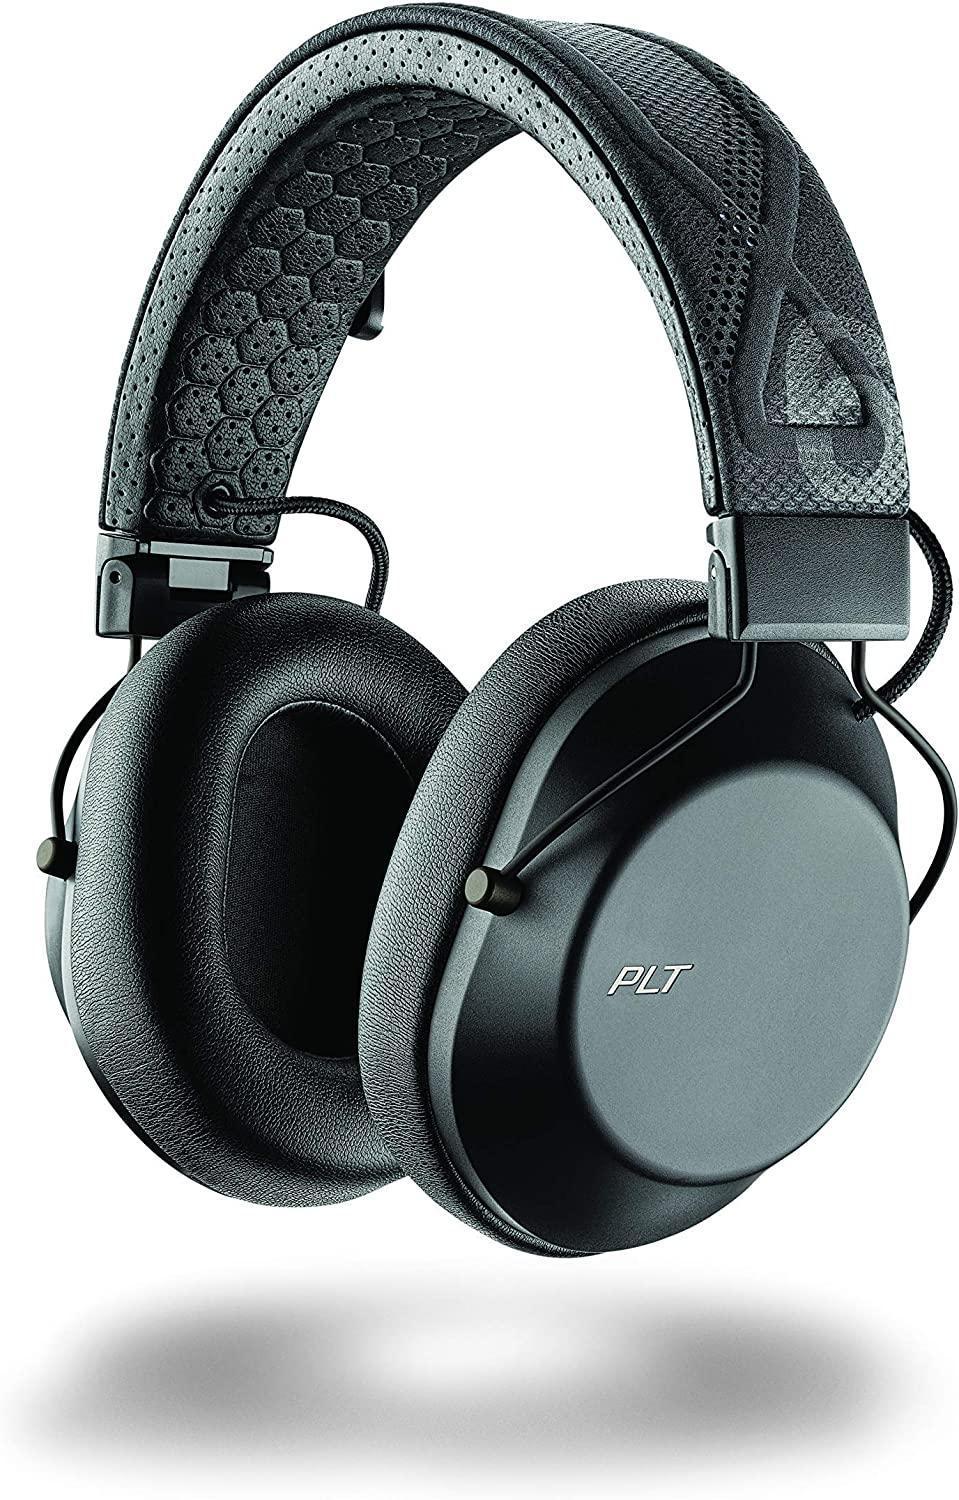 BackBeat FIT 6100 Wireless Bluetooth Headphones, Sport, Sweatproof and Water-Resistant, Black (Renewed)